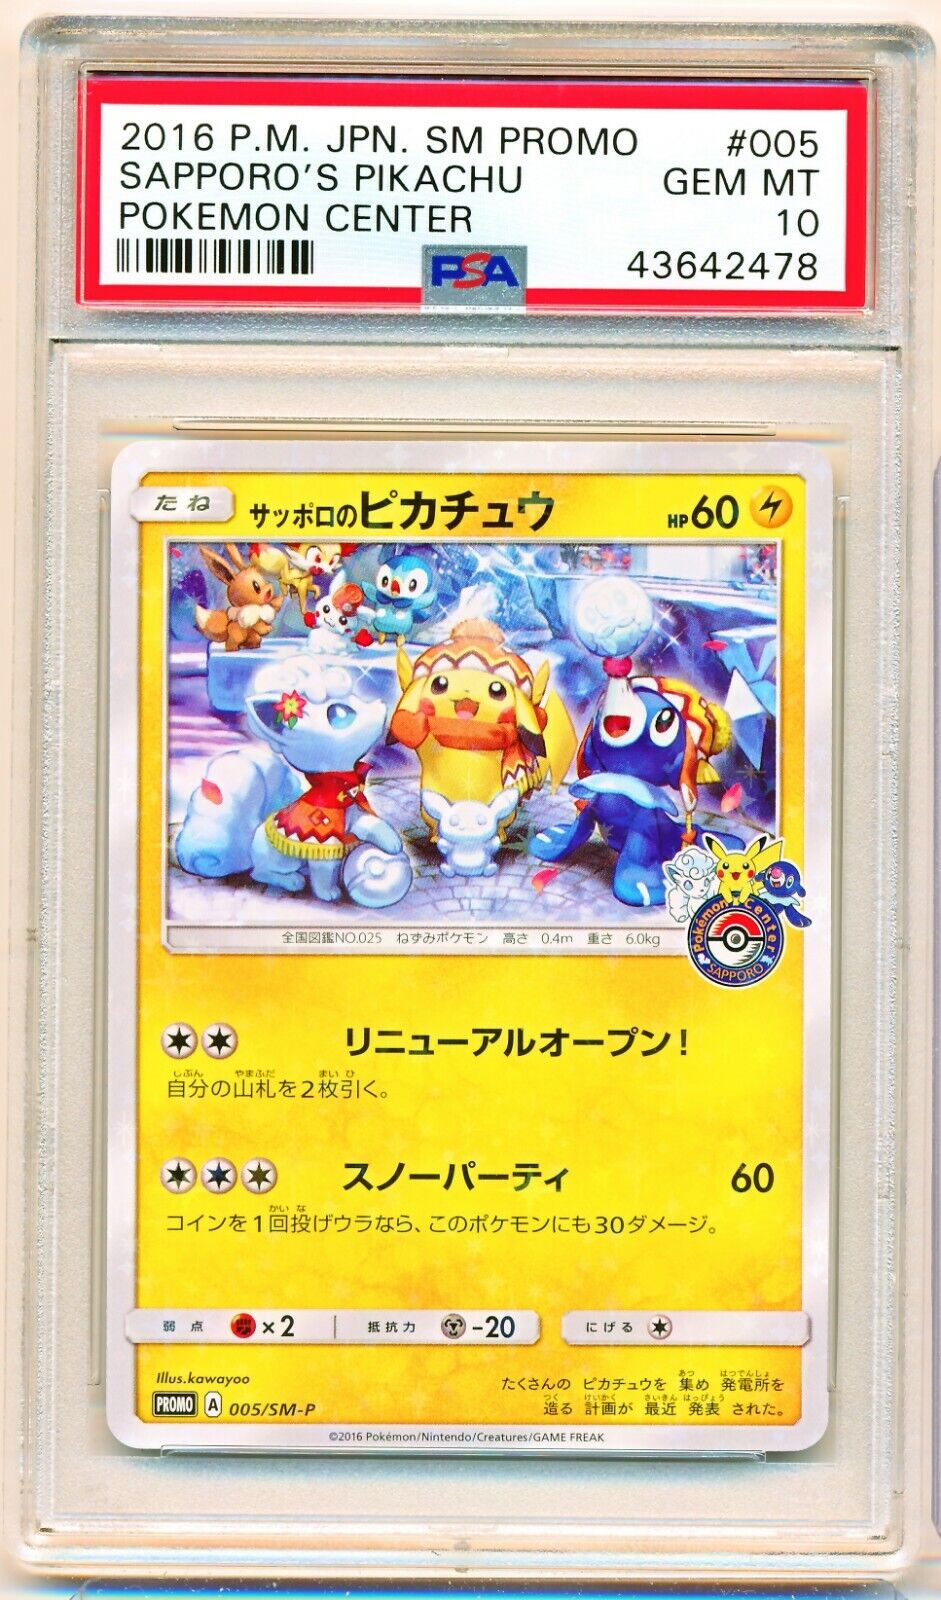 PSA 10 GEM MINT - Sapporo Pikachu 005/SM-P Center PROMO Pokemon Card  Japanese